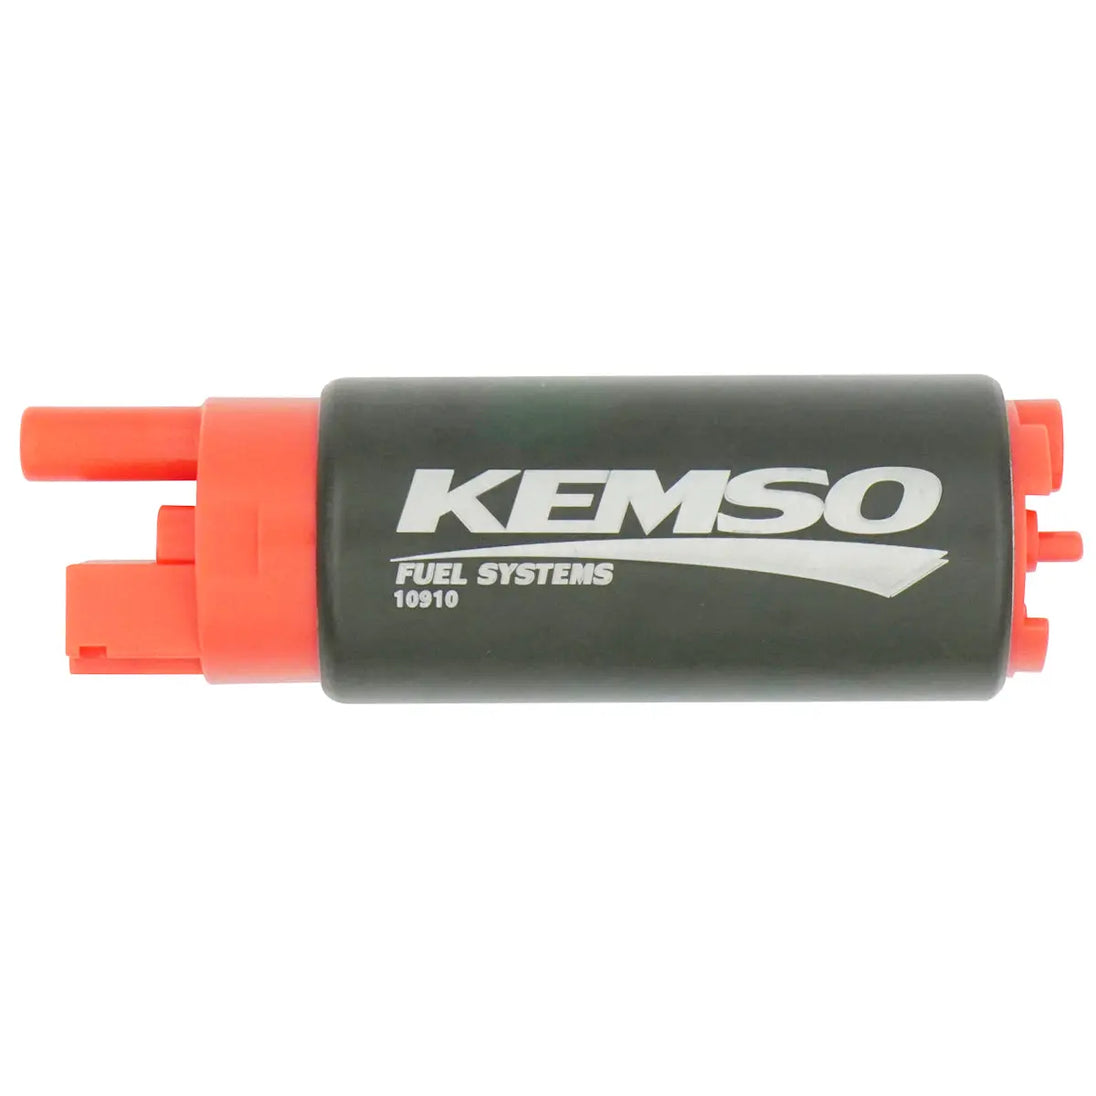 KEMSO 340LPH High Performance Fuel Pump for Daihatsu Applause 1989-1997 - KEMSO